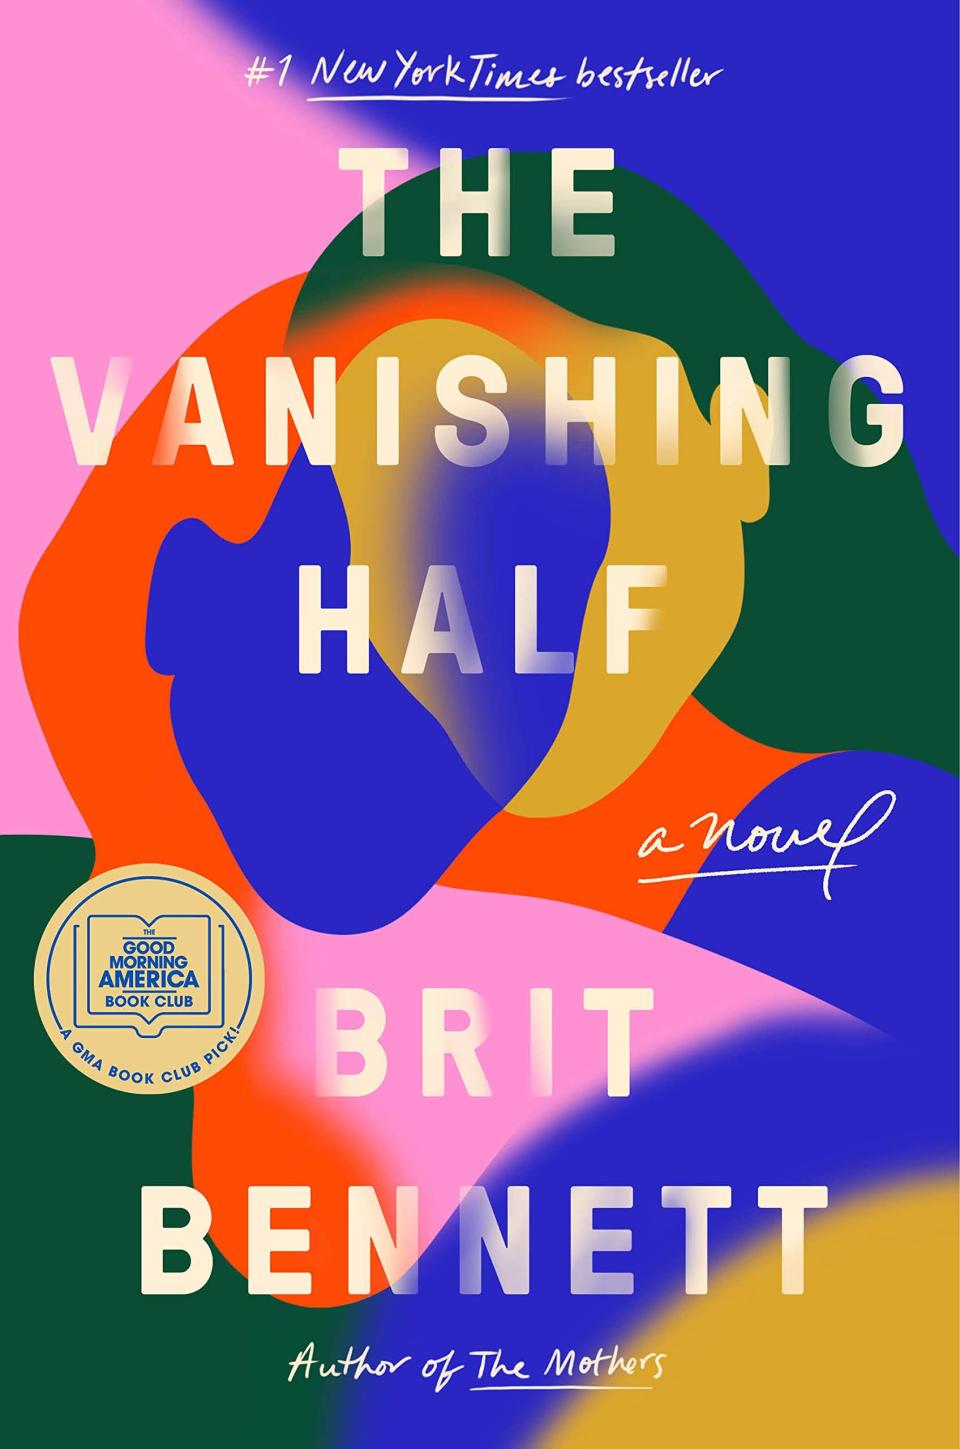 "The Vanishing Half," by Brit Bennett